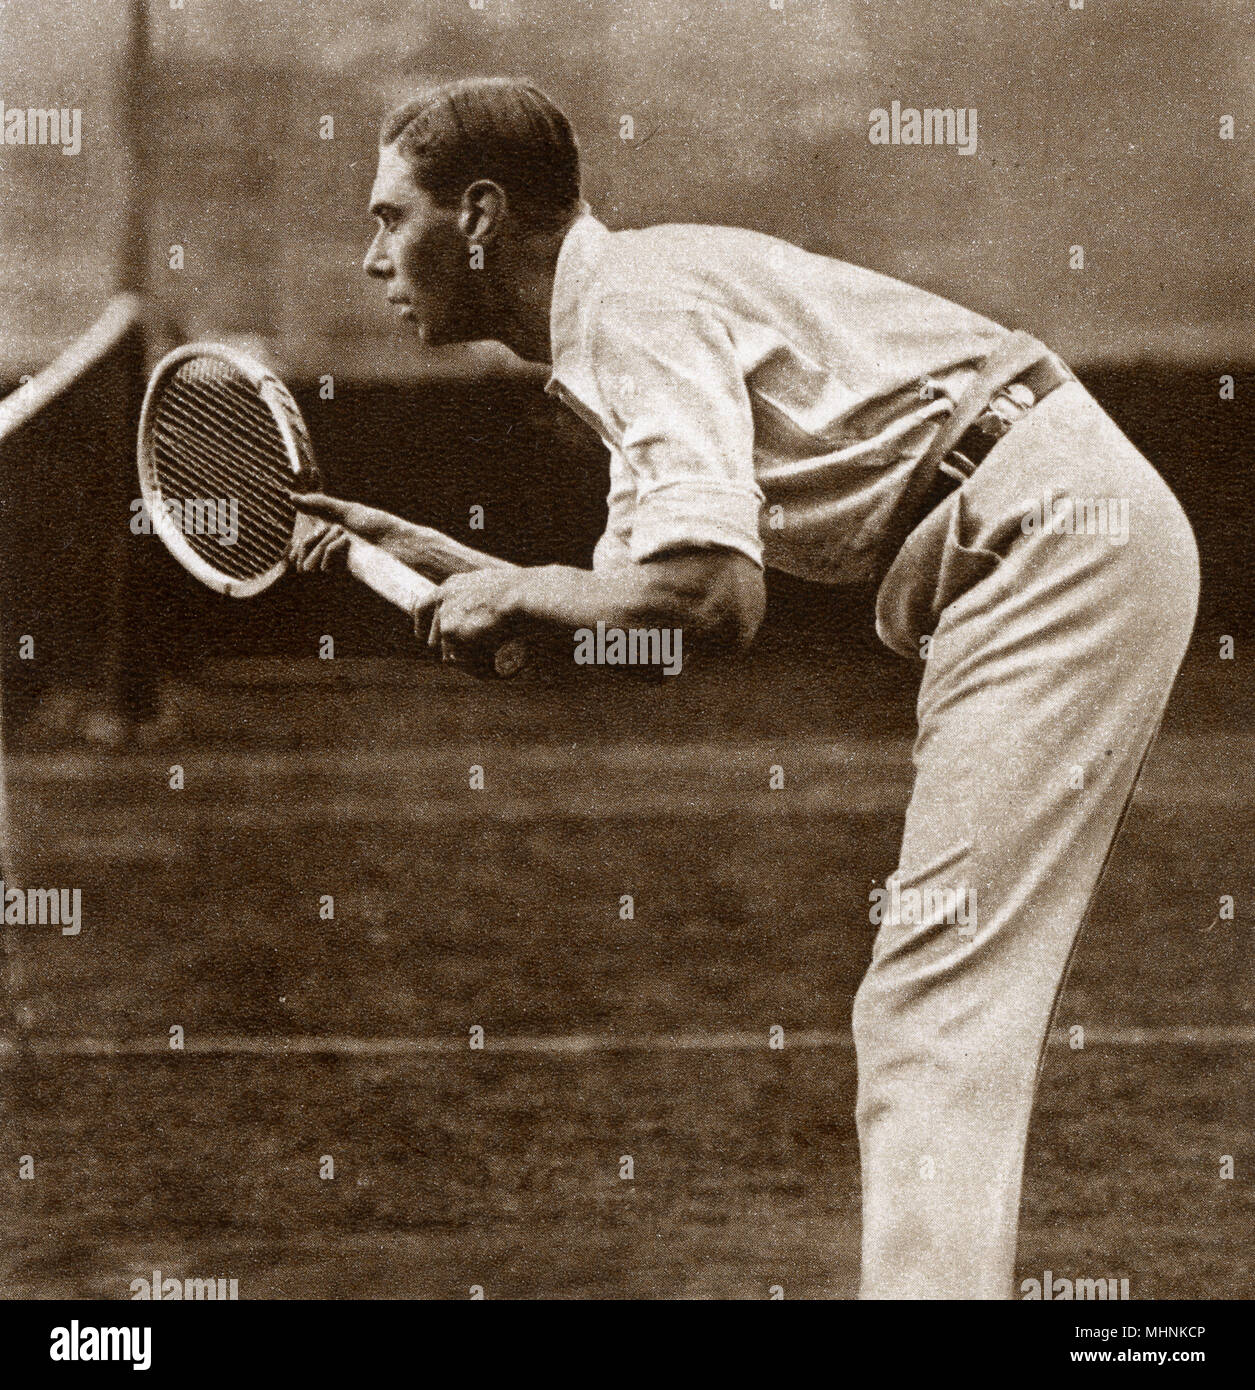 Prince Albert, Duc de York - Championnat de tennis de gazon de la RAF Banque D'Images